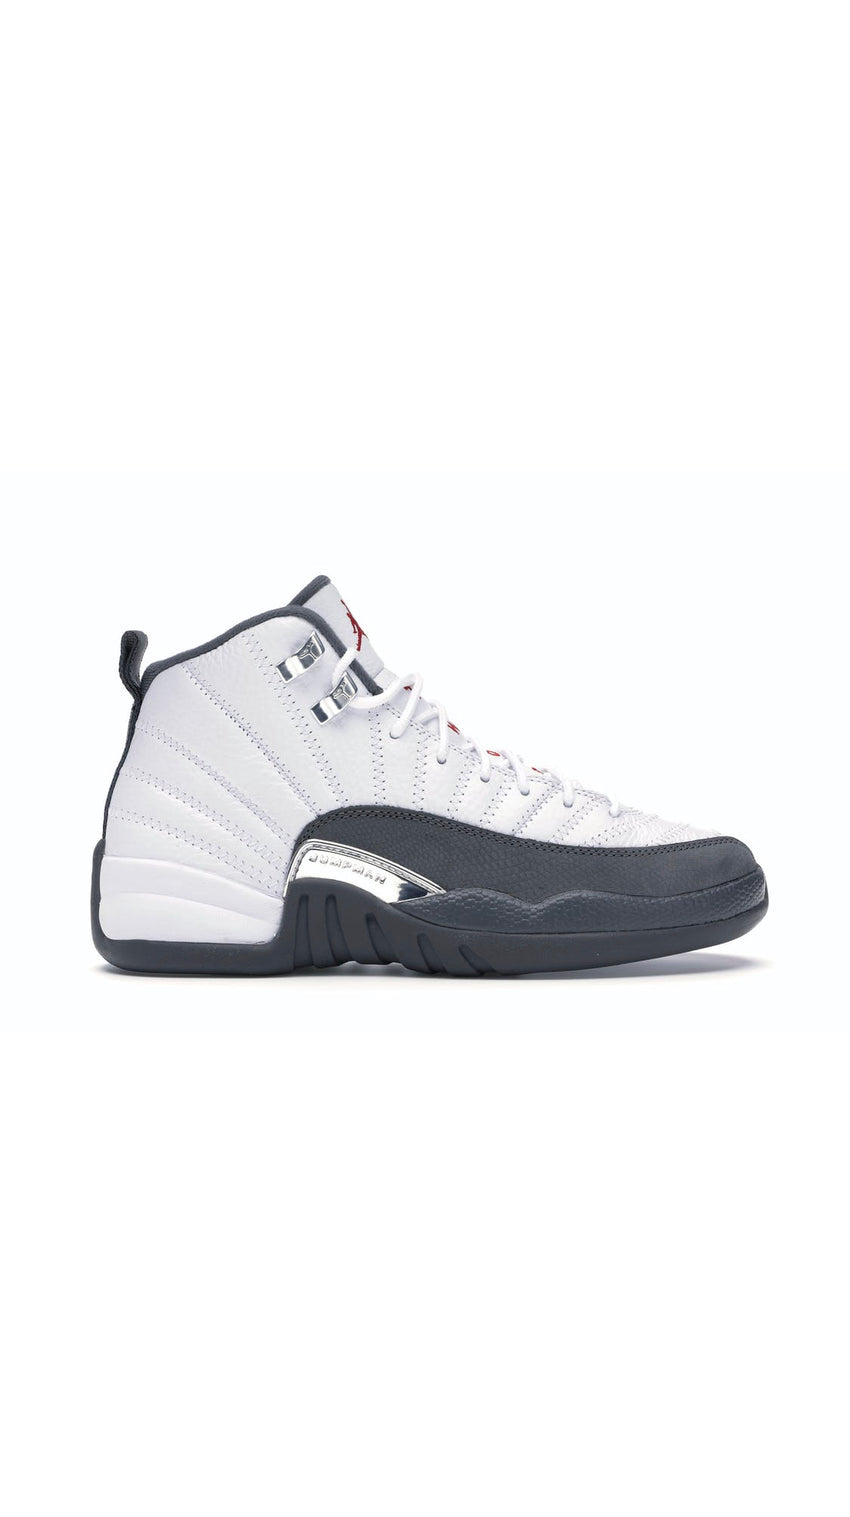 Jordan 12 Retro “White Dark Grey” (GS)